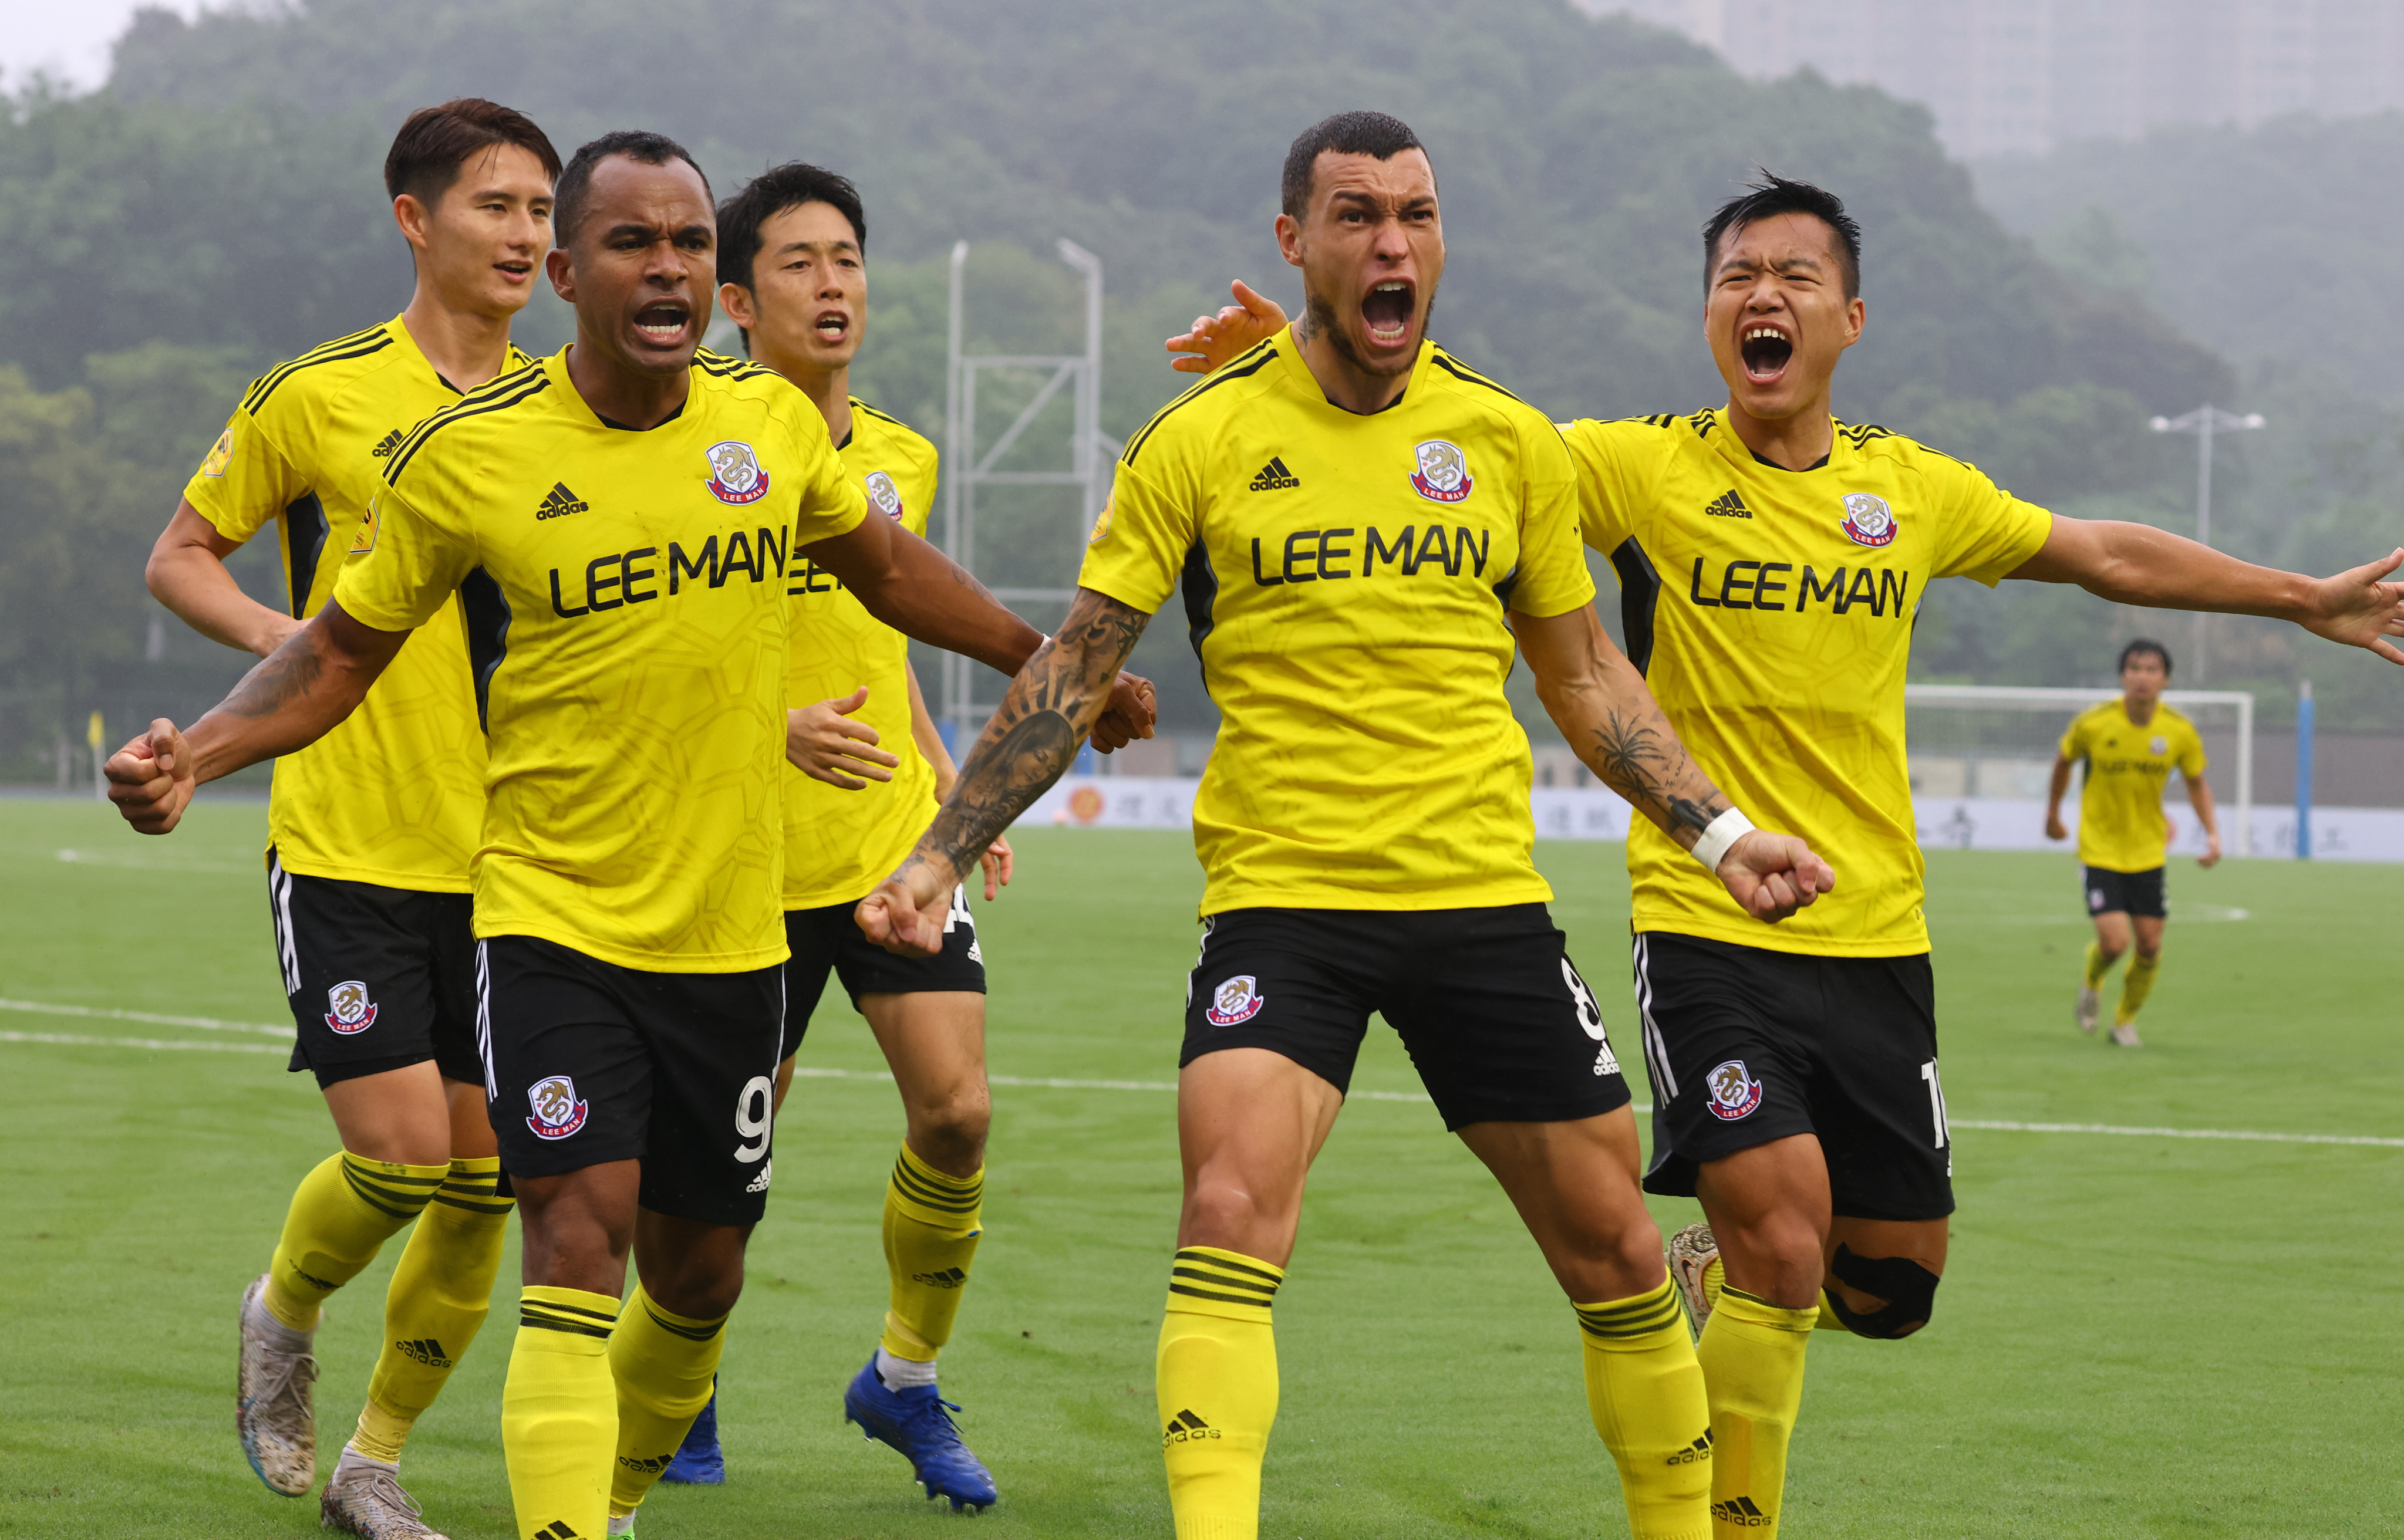 Lee Man striker Everton Camargo celebrates scoring against Sham Shui Po in the Hong Kong Premier League. Photo: Dickson Lee